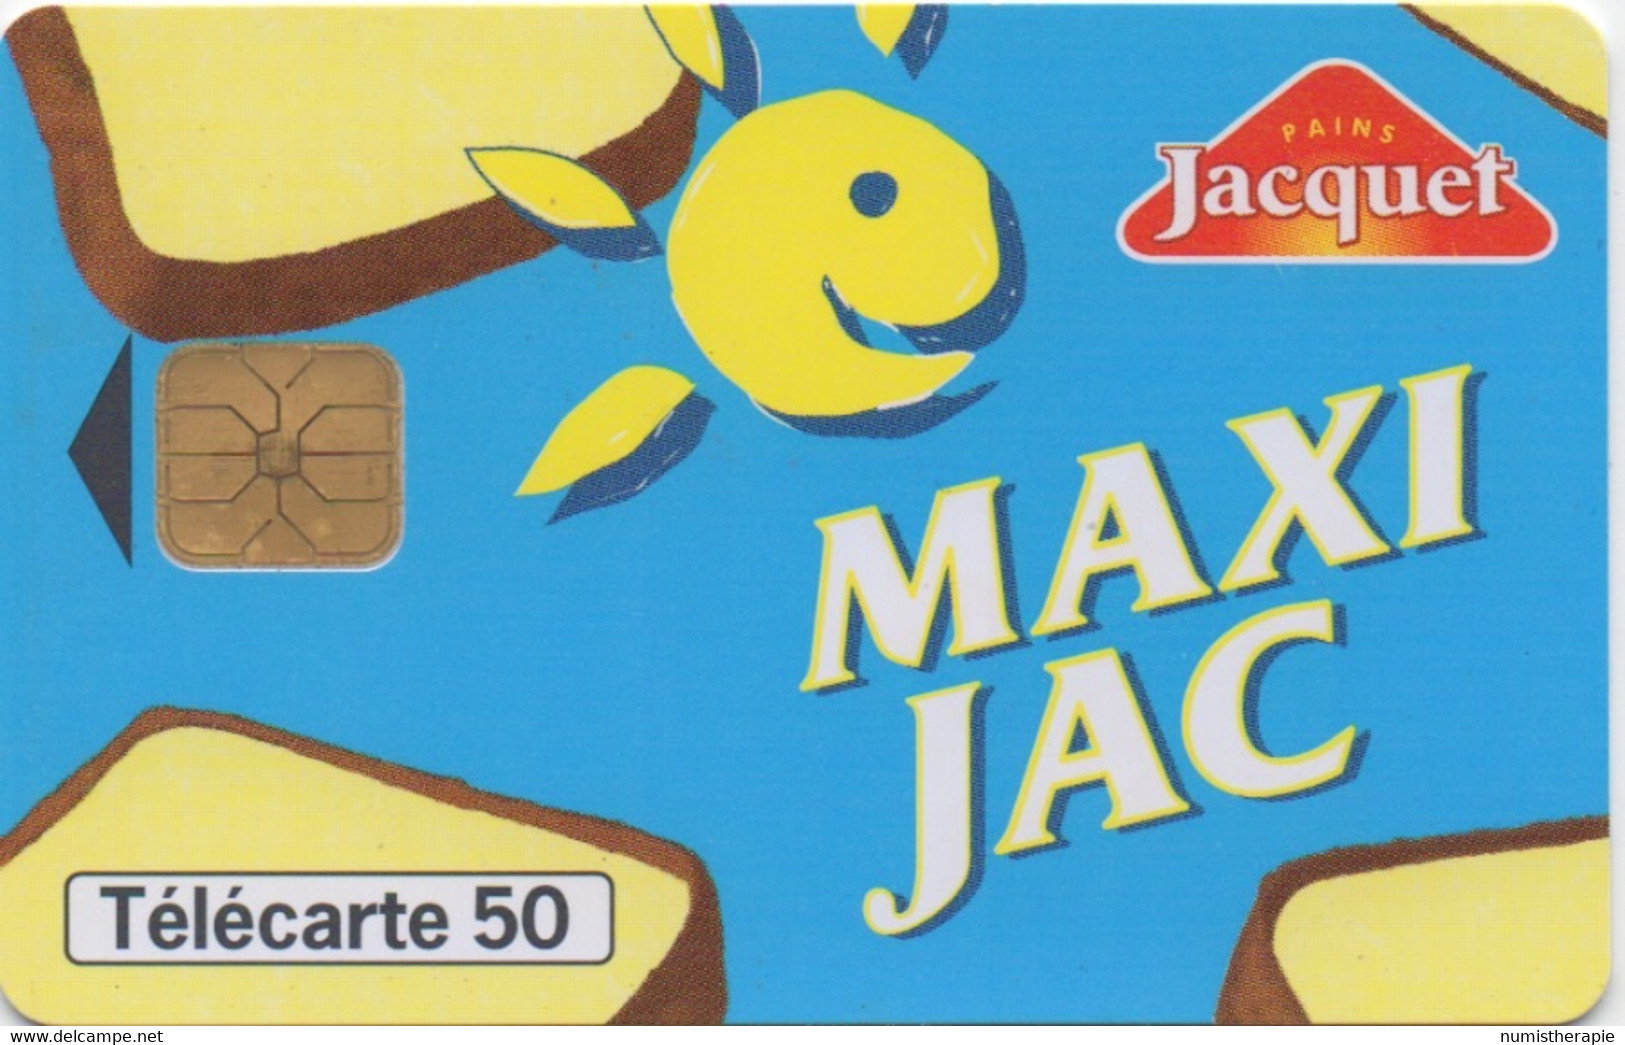 Pains Jacquet Maxi Jac 1999 - Food